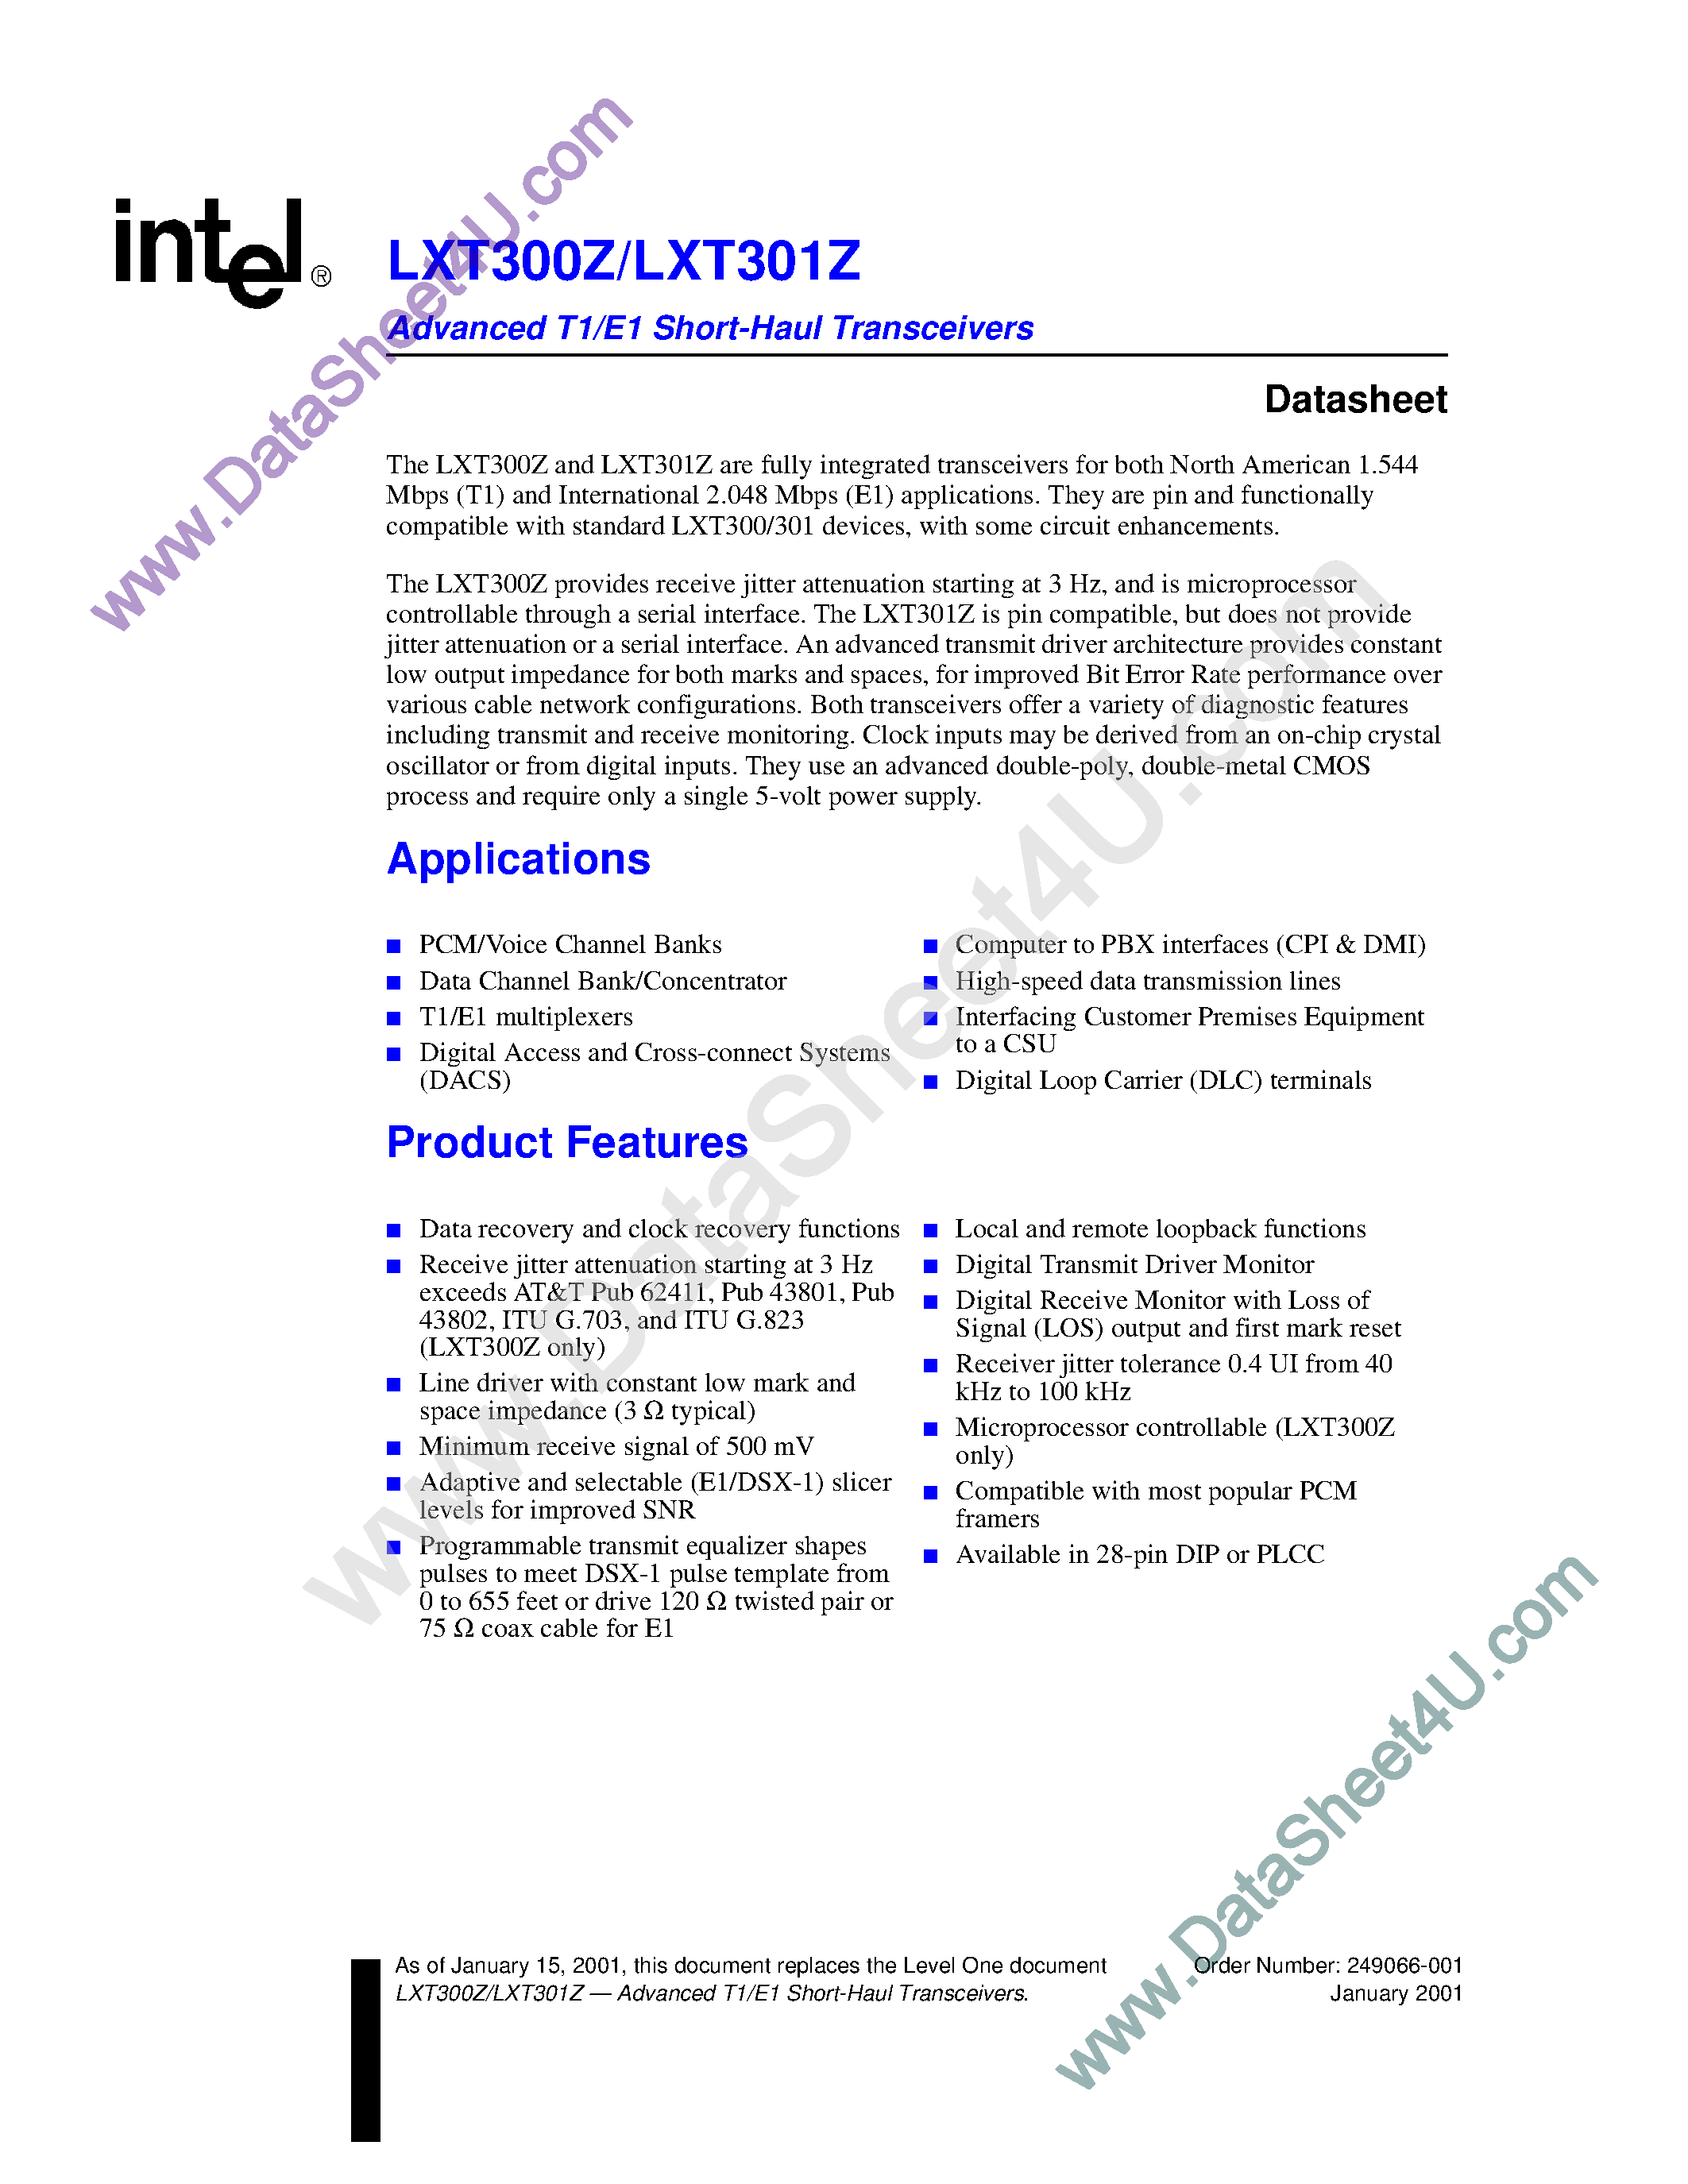 Datasheet LXT300Z - (LXT300Z / LXT301Z) Advanced T1/E1 Short-Haul Transceivers page 1